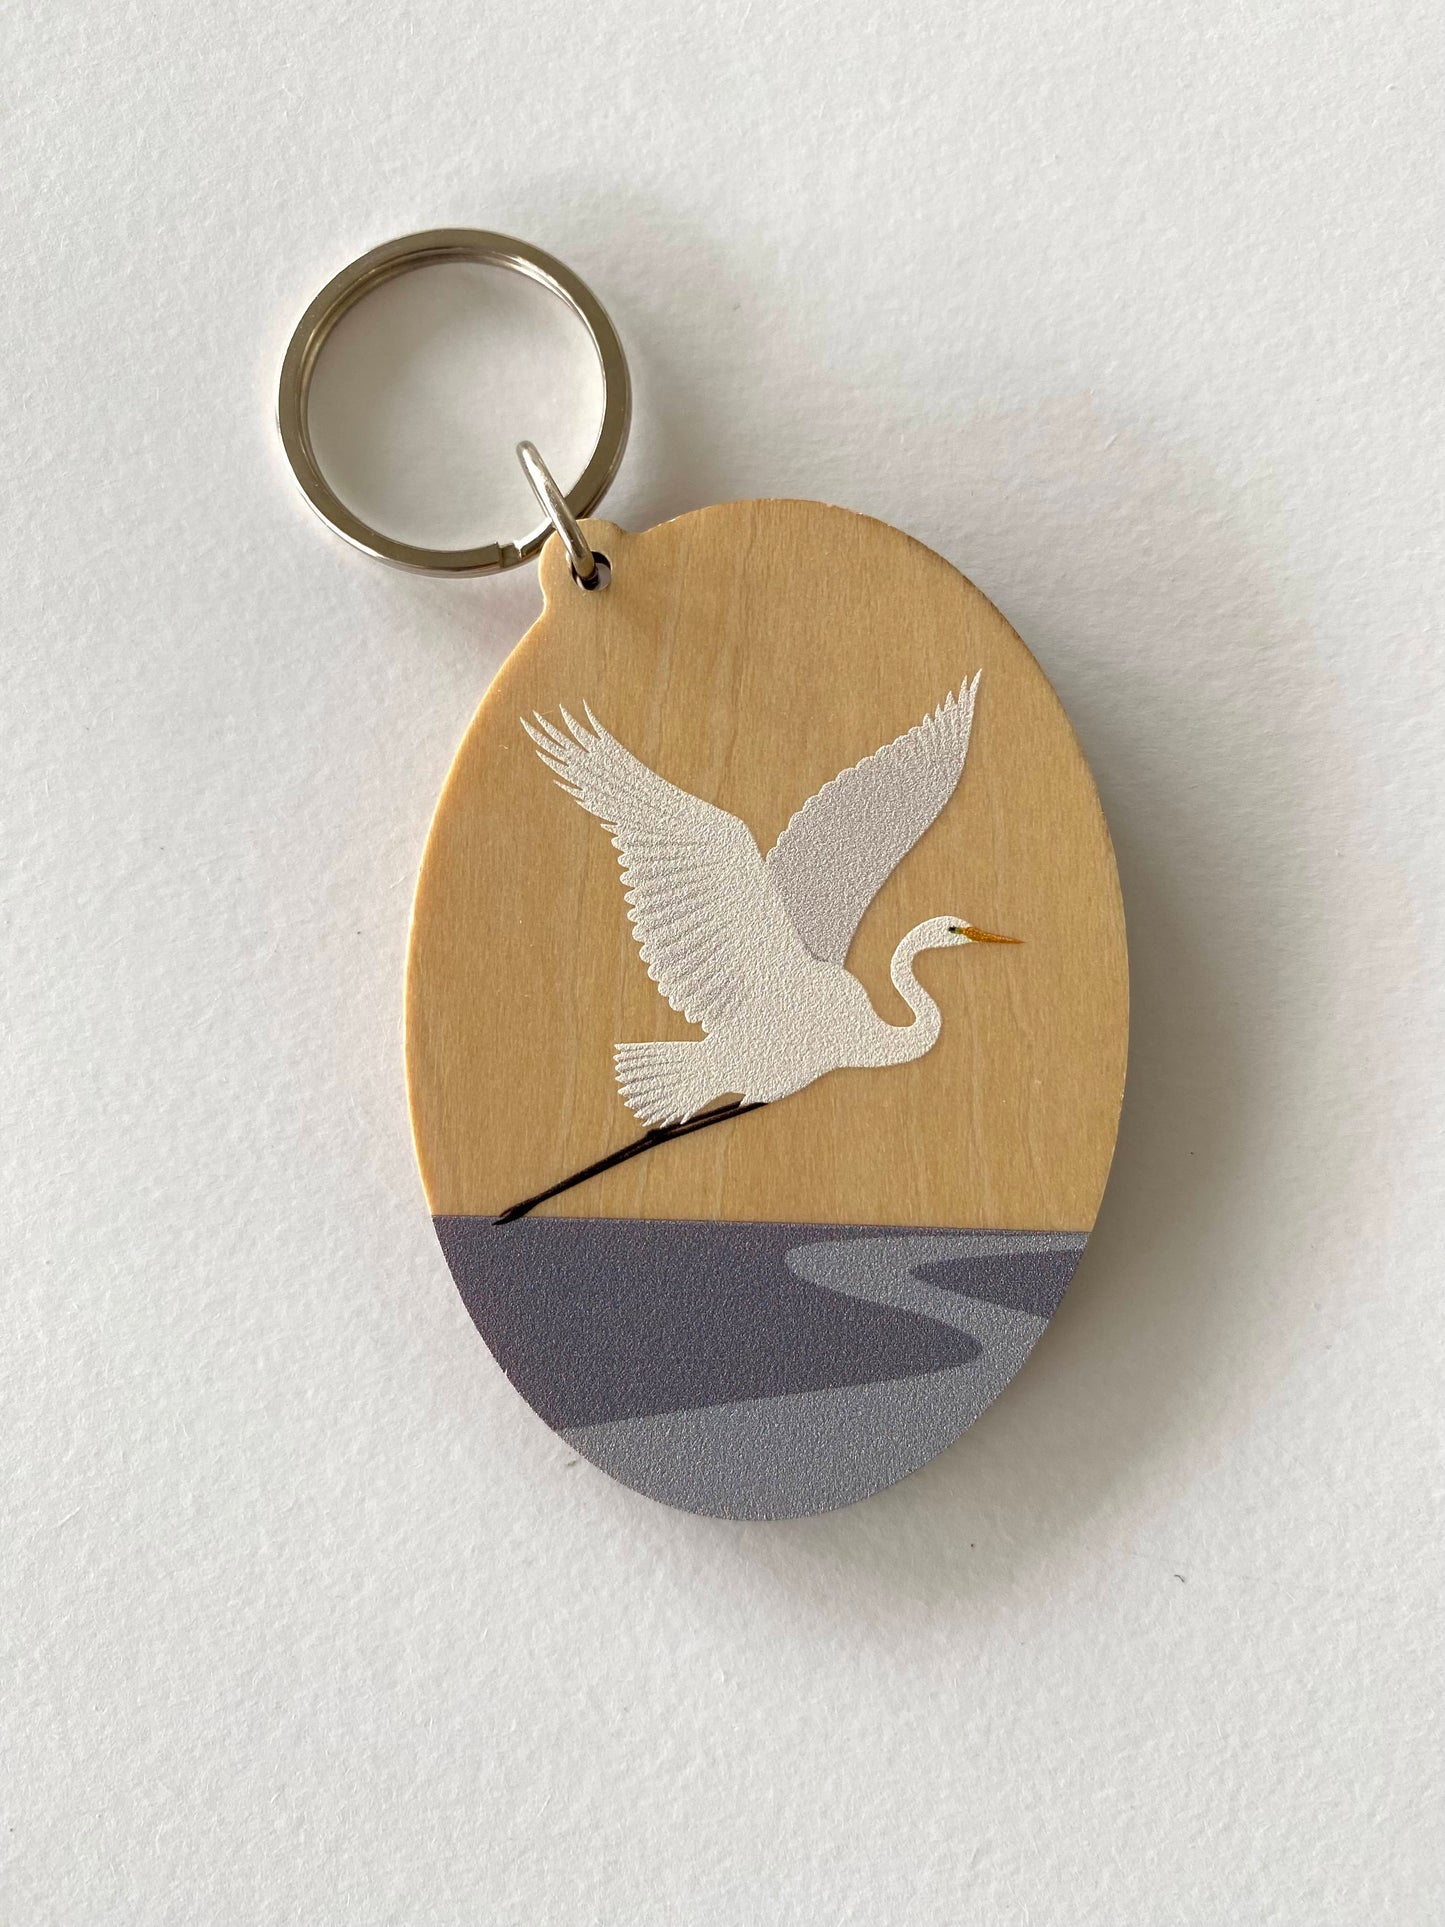 White Heron Wood Keytag art print by New Zealand artist Hansby Design